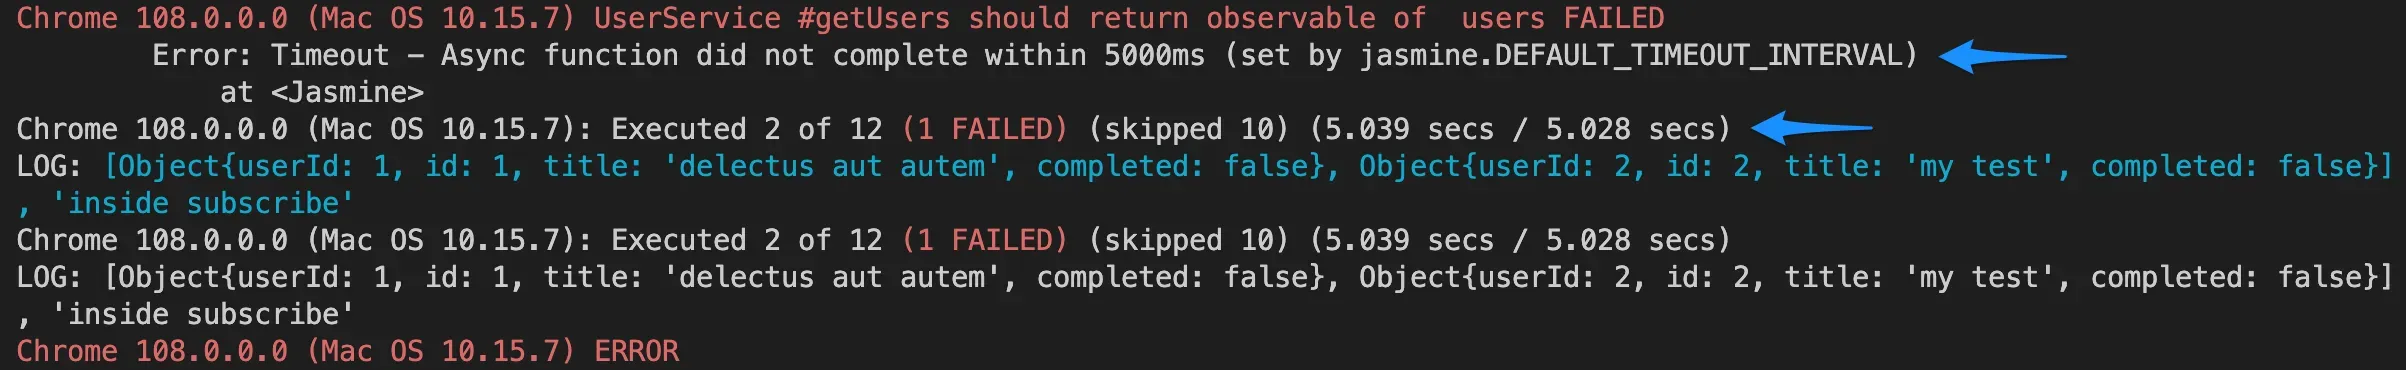 asynchronous observable unit testing with jasmine/karma